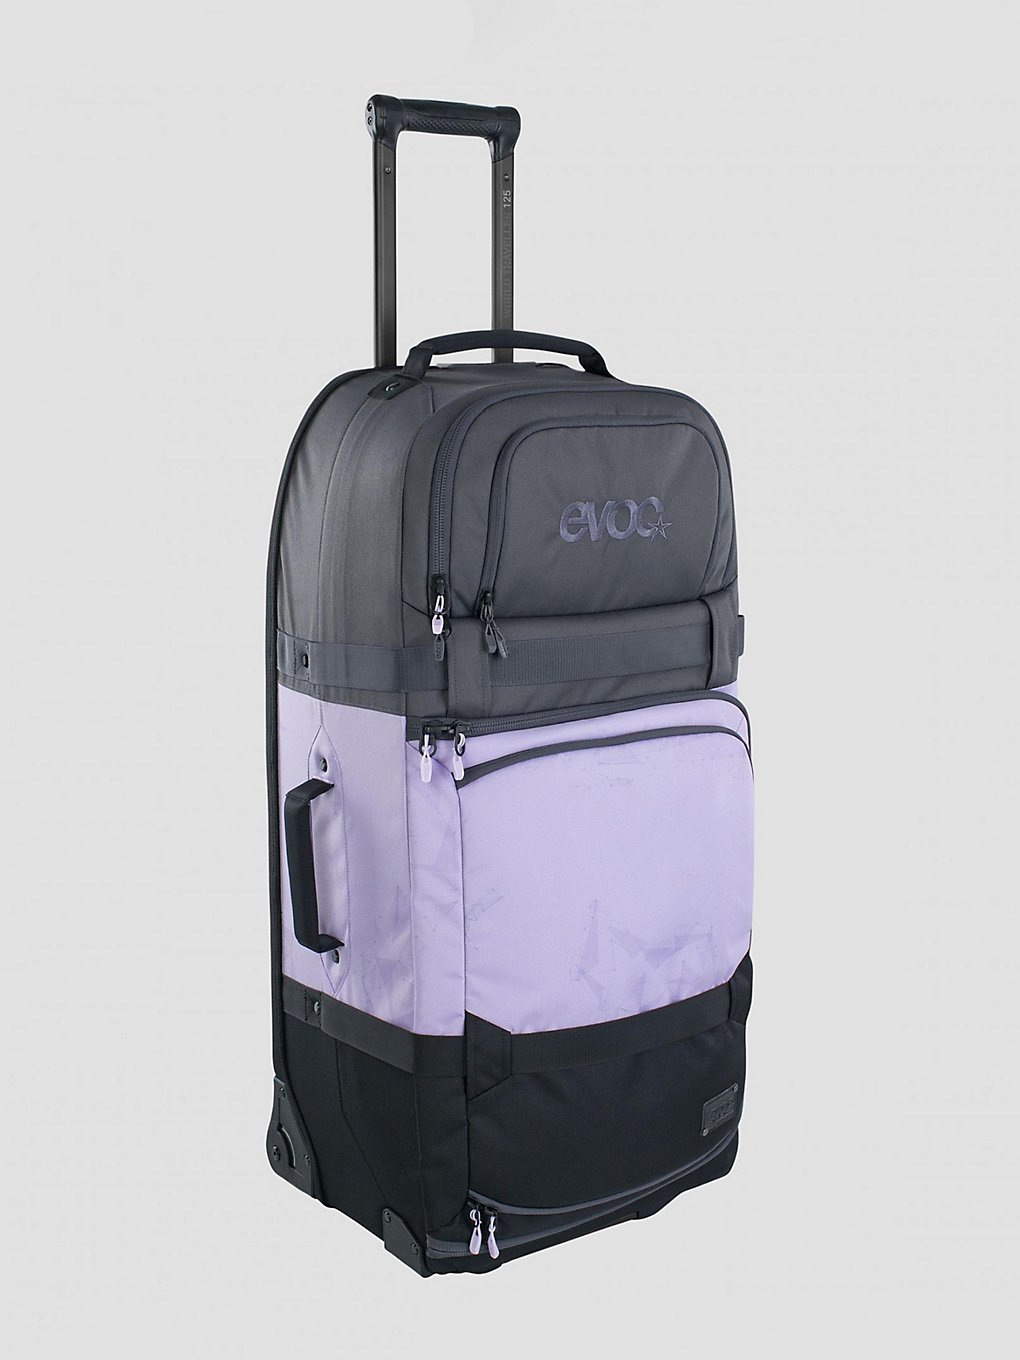 Evoc World Traveller 125L Travel Bag multicolour kaufen